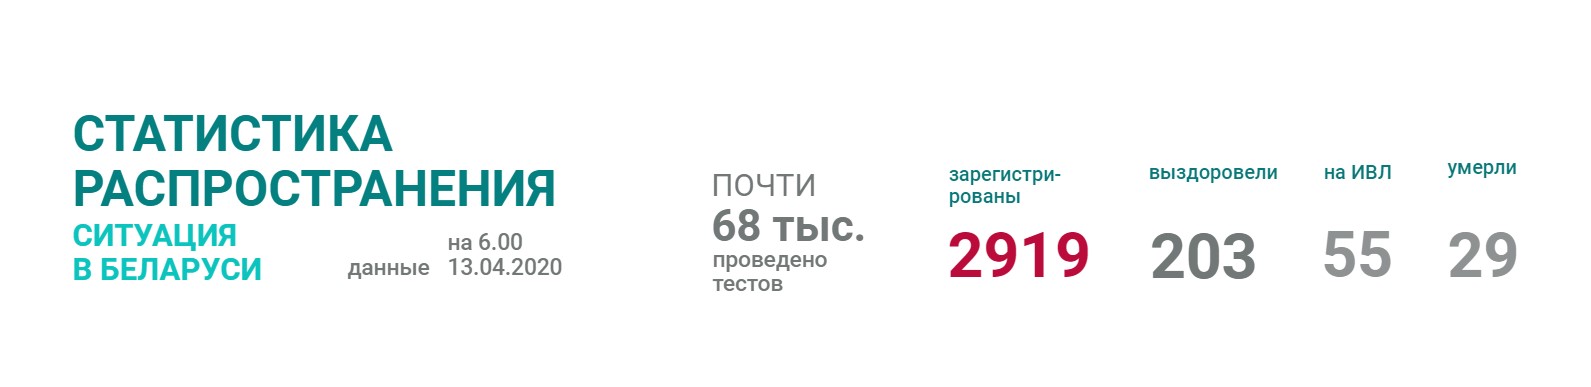 Коронавирус в Беларуси: плюс 341 заболевший и три умерших за сутки